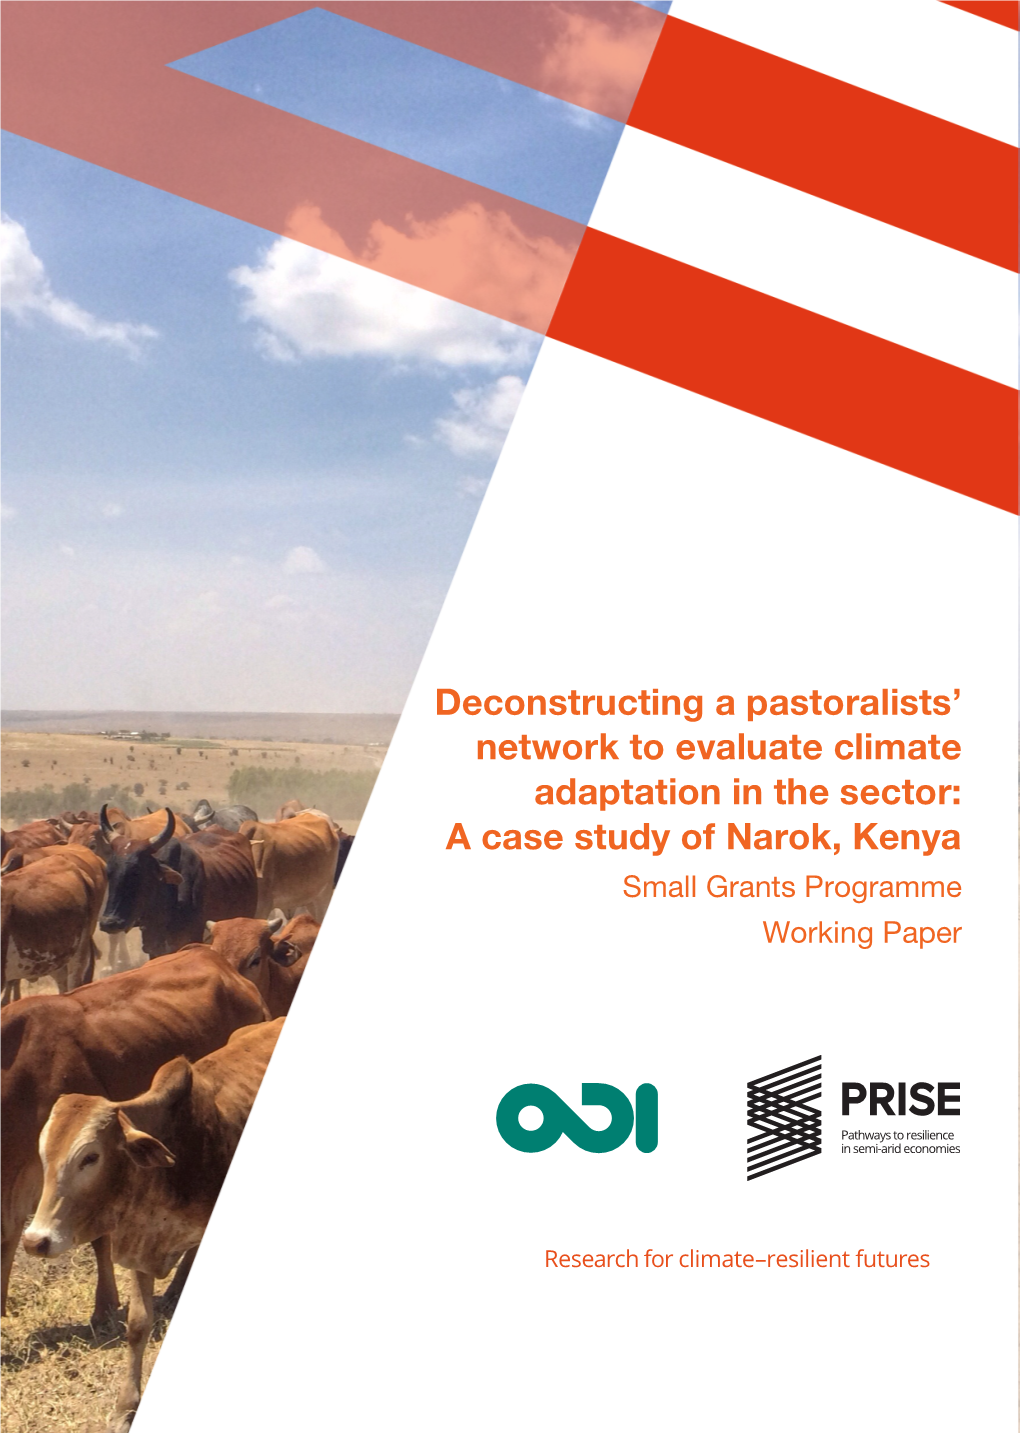 A Case Study of Narok, Kenya Small Grants Programme Working Paper